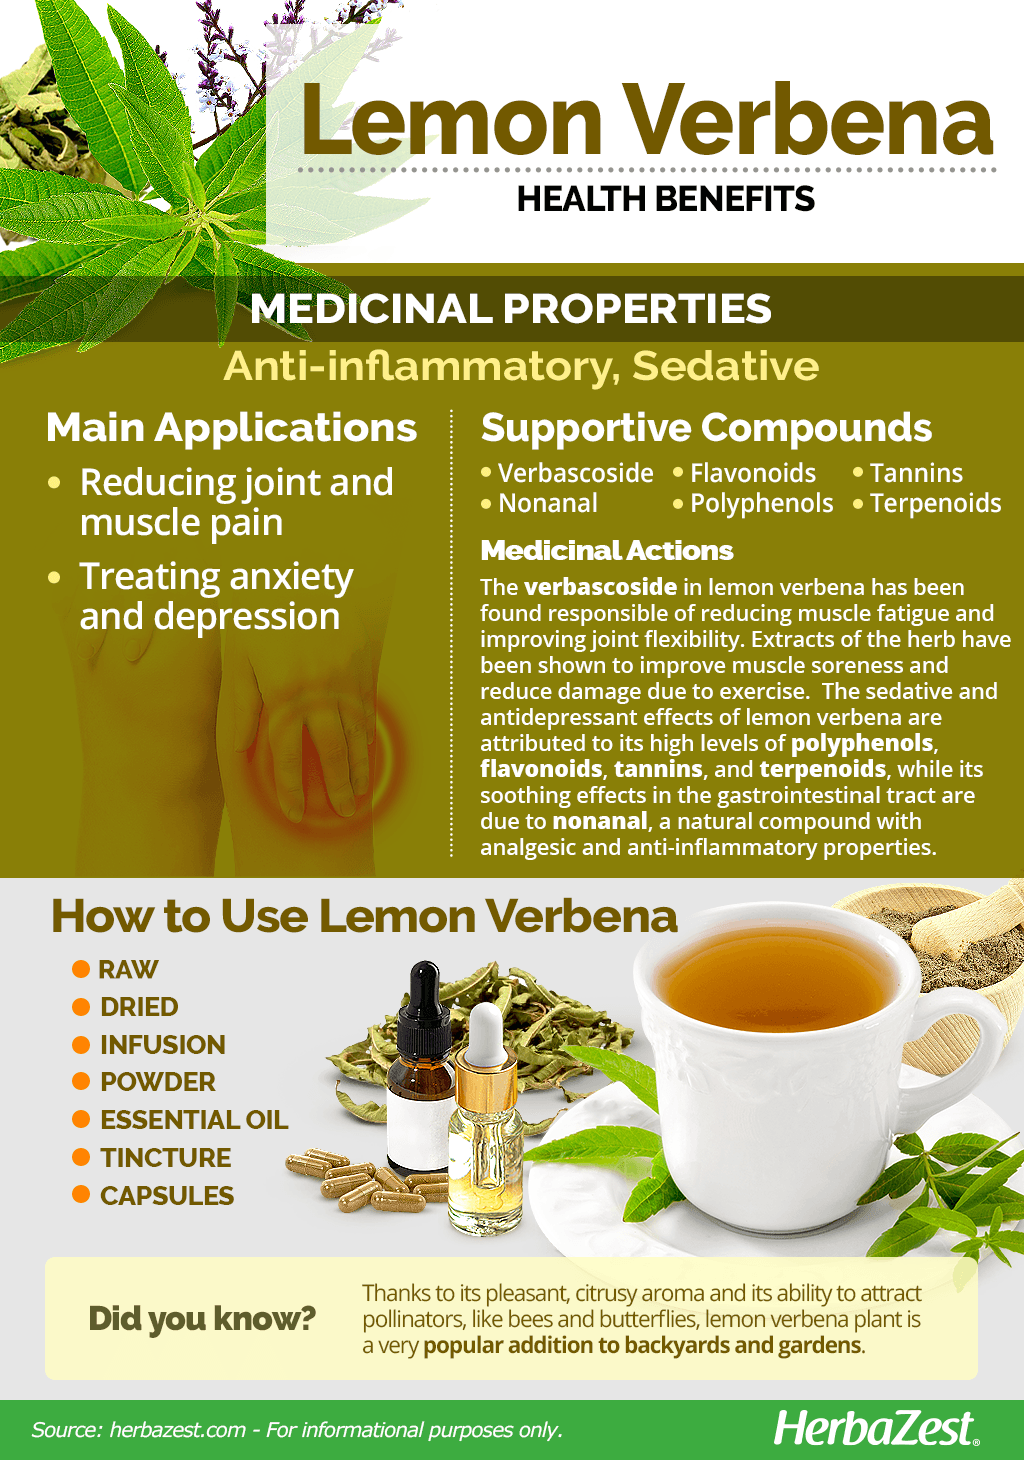 Lemon Verbena Essential Oil Uses and Benefits